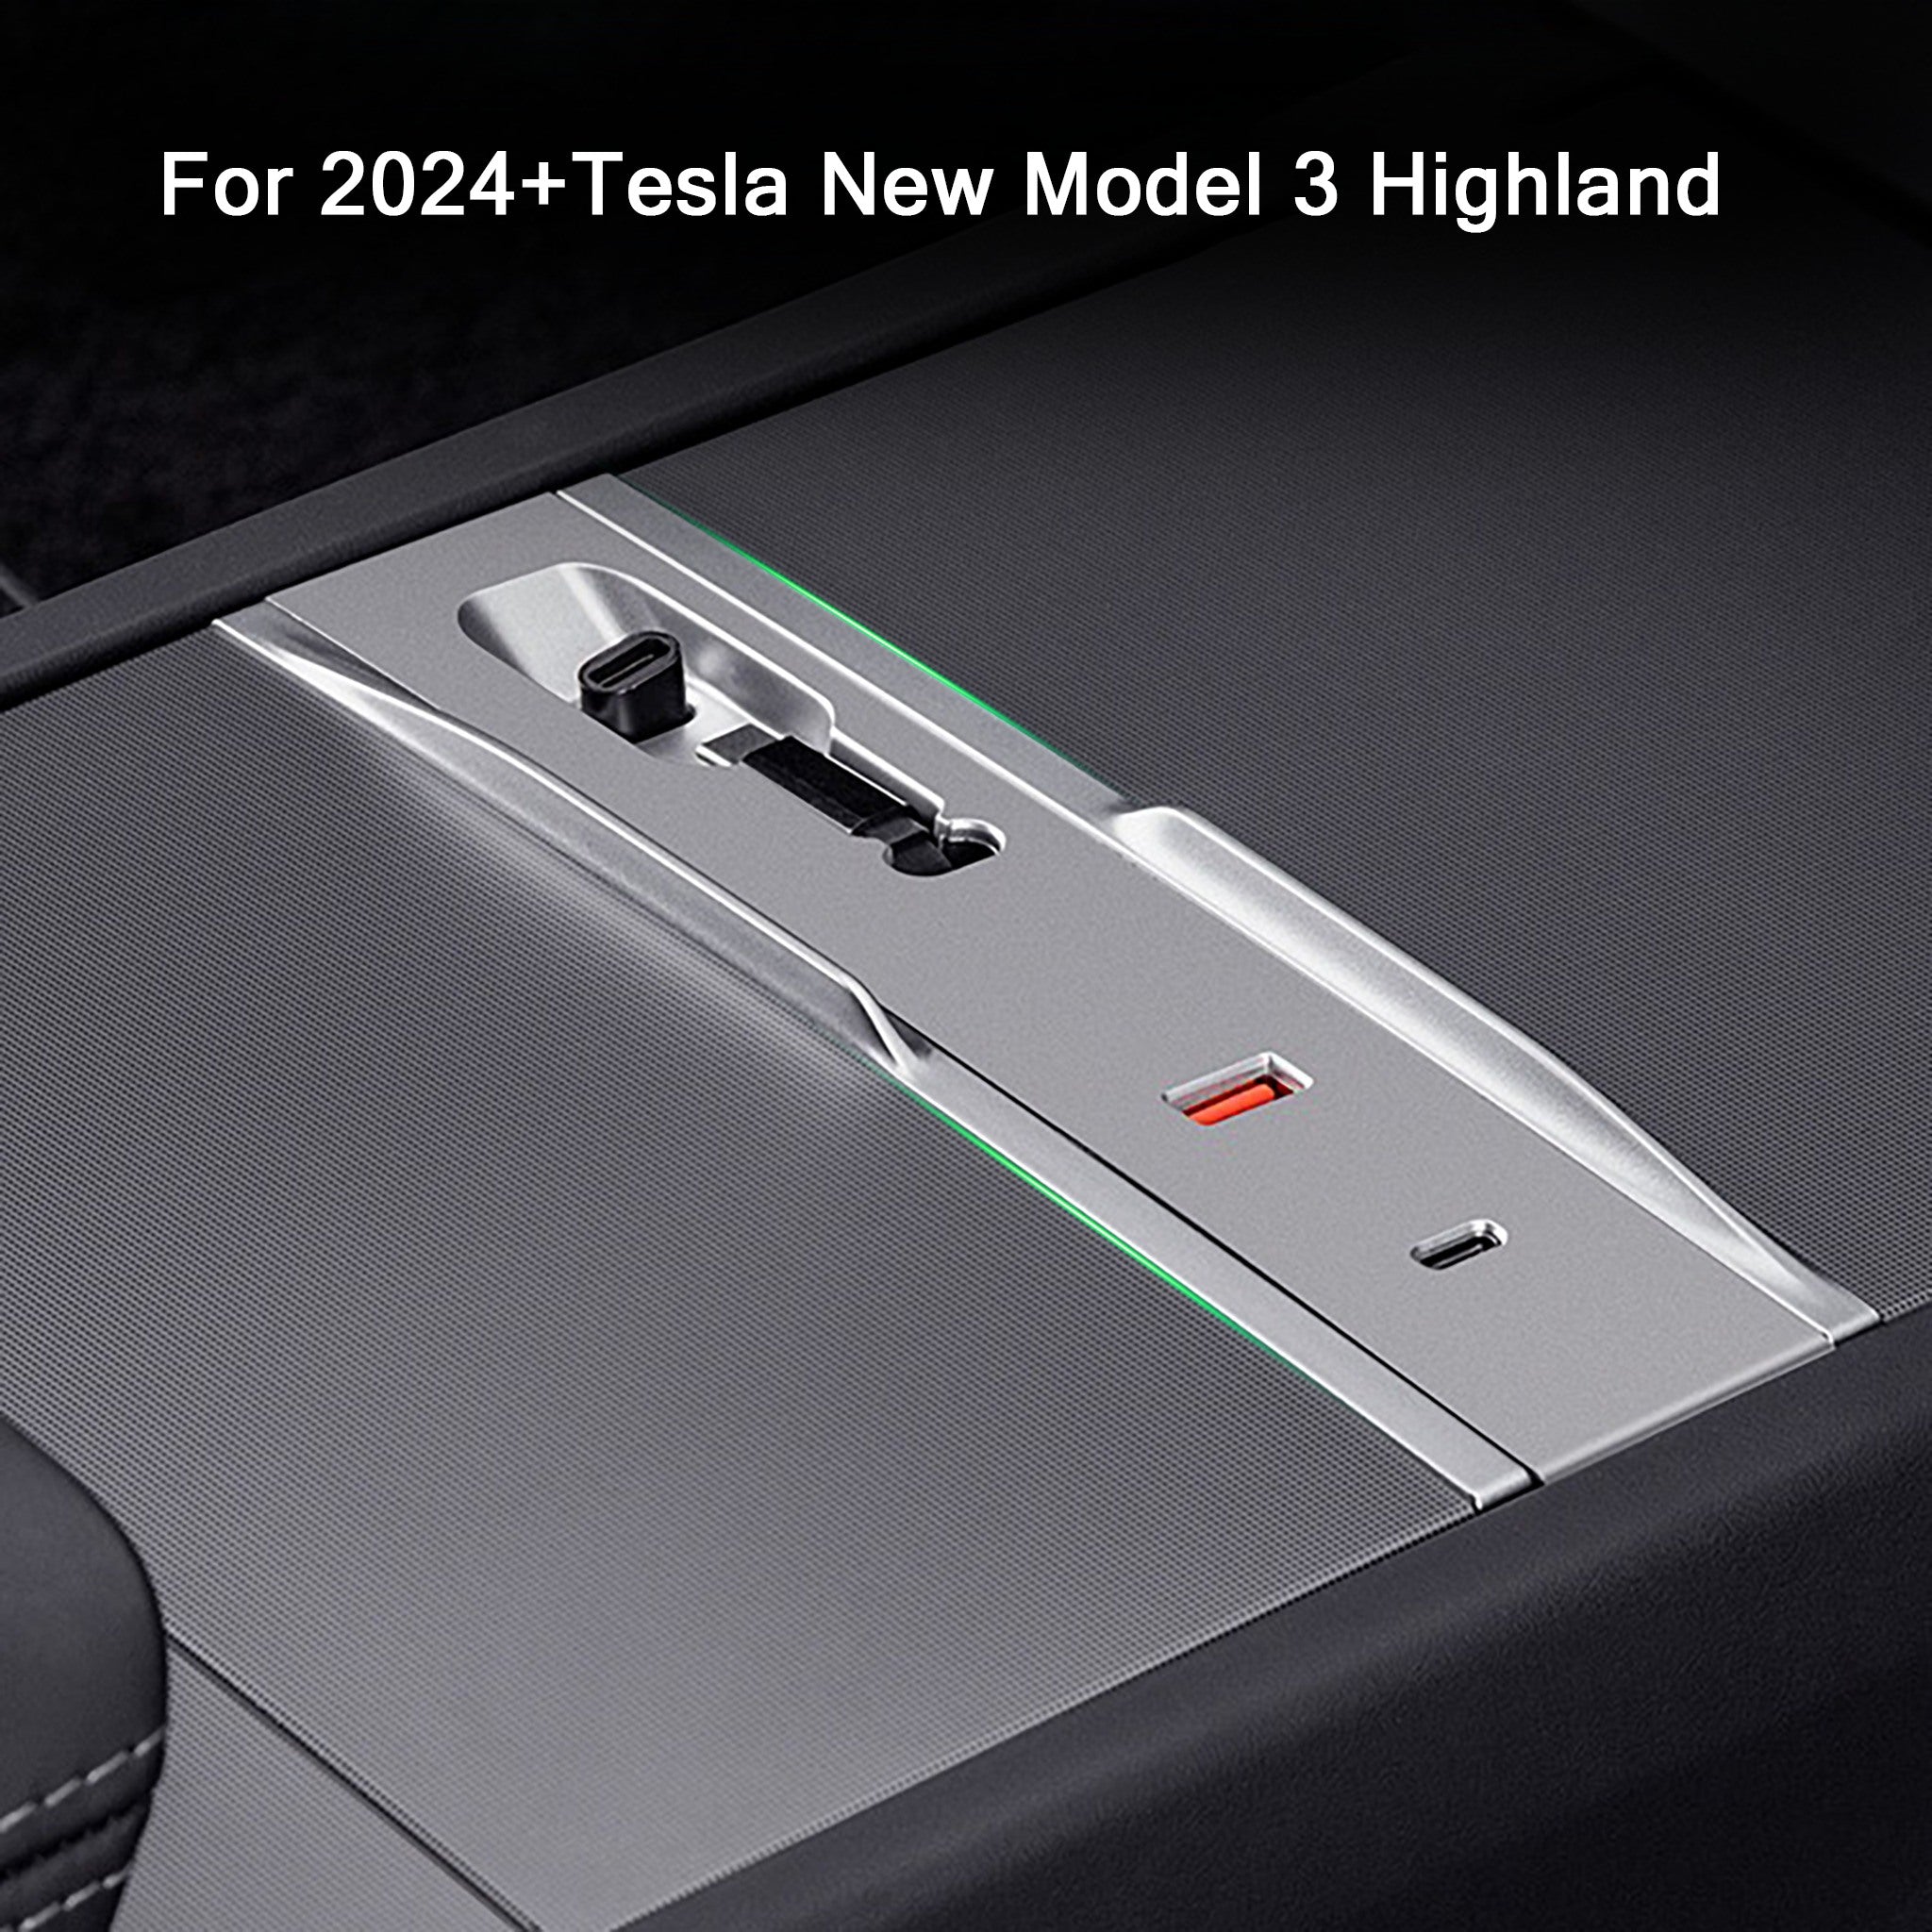 Tesla USB Hub Docking Station for New Model 3 Highland